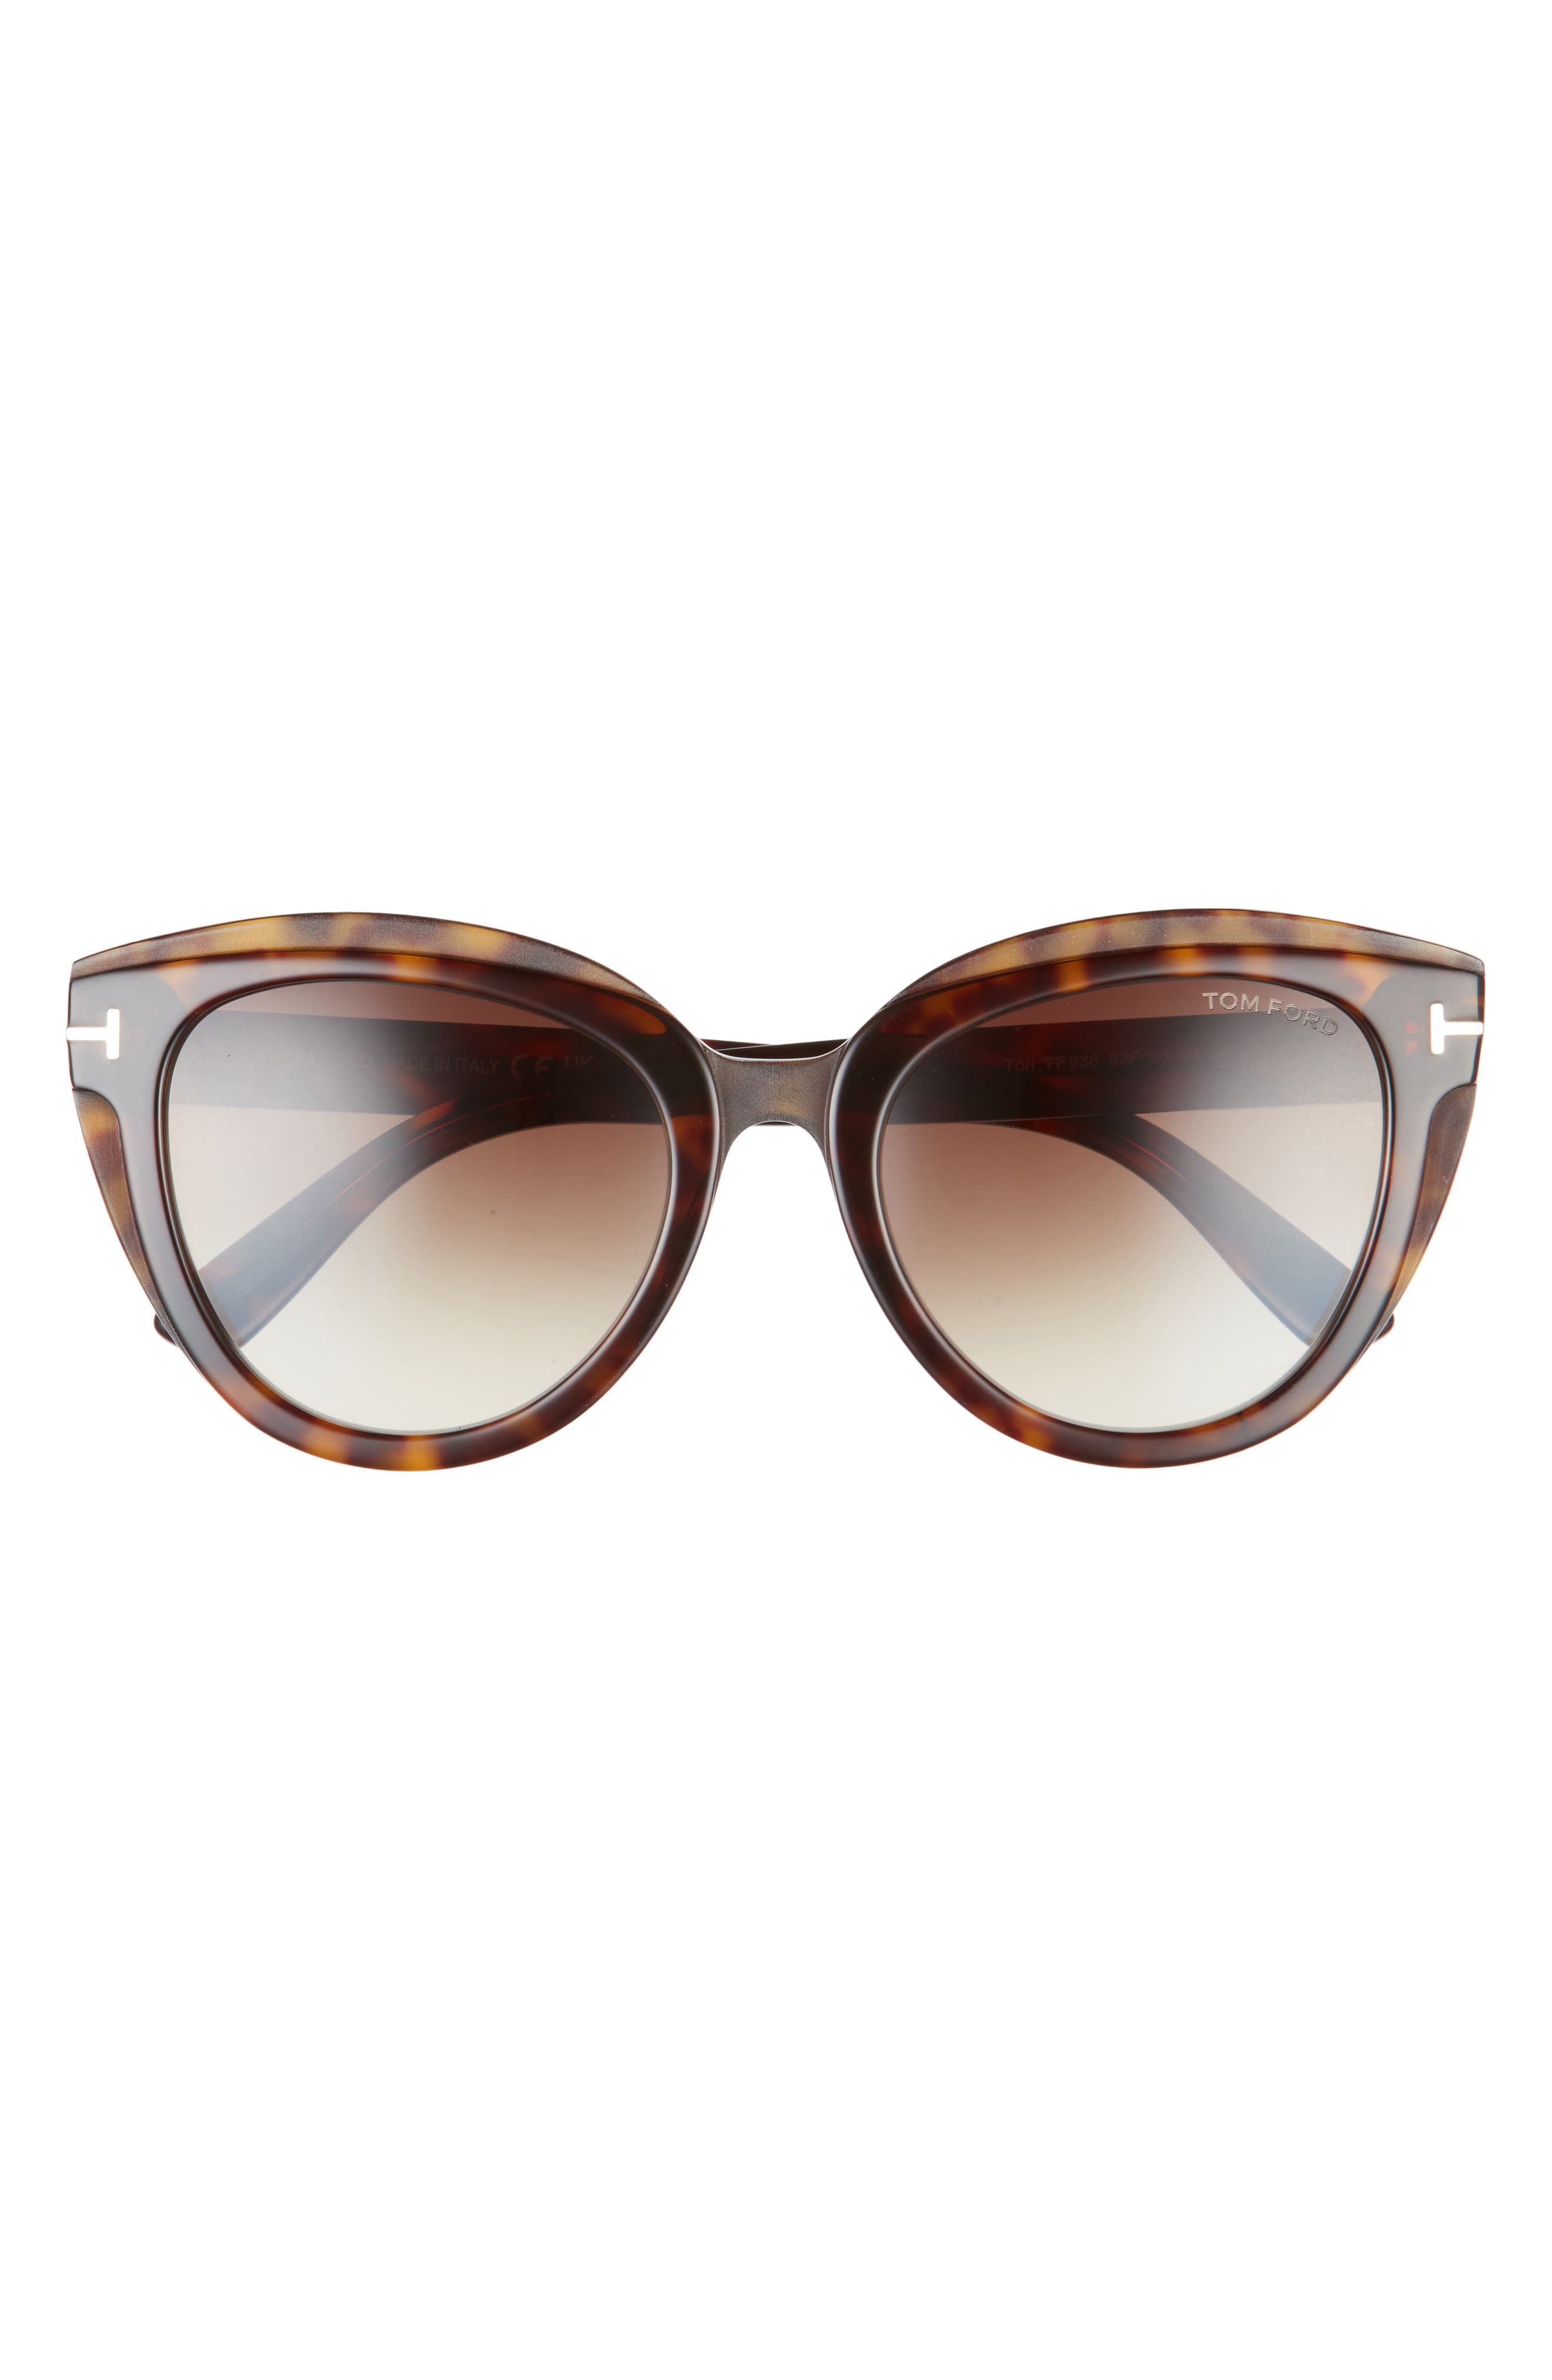 Tom Ford Tori 53mm Cat Eye Sunglasses in Dark Havana /Gradient Brown